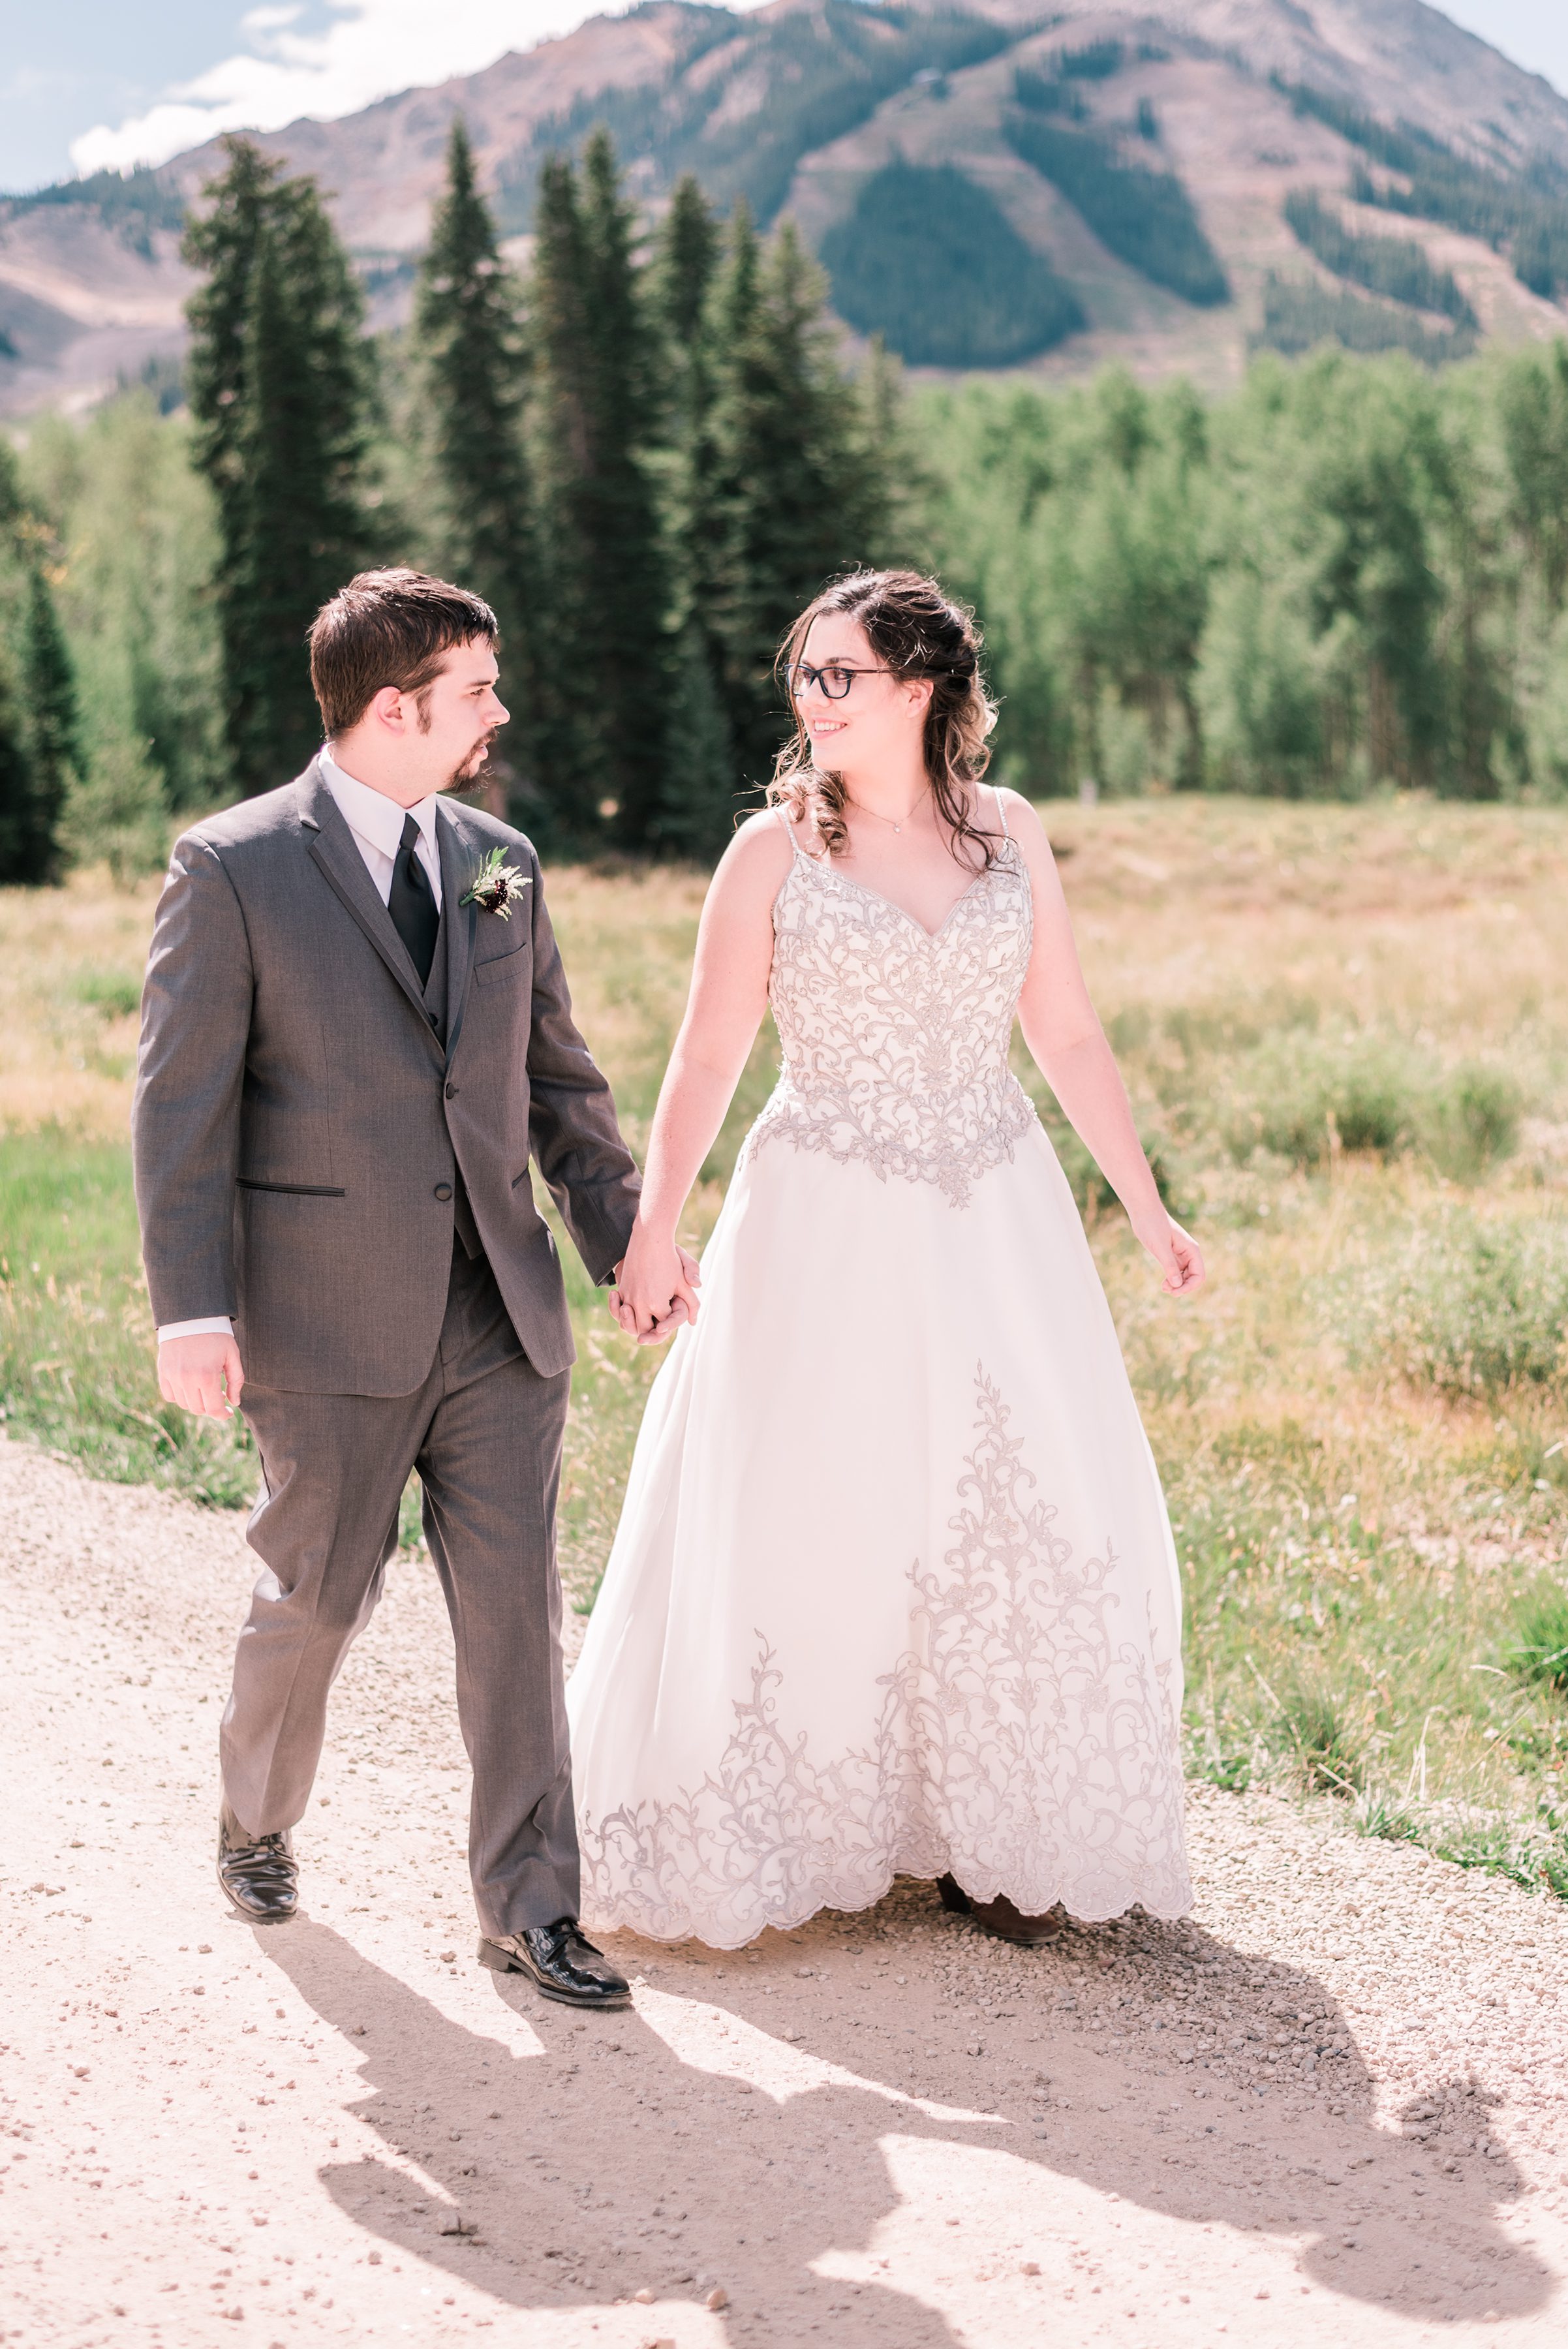 Alyse & Nate's Crested Butte Wedding at Ten Peaks Umbrella Bar | amanda.matilda.photography